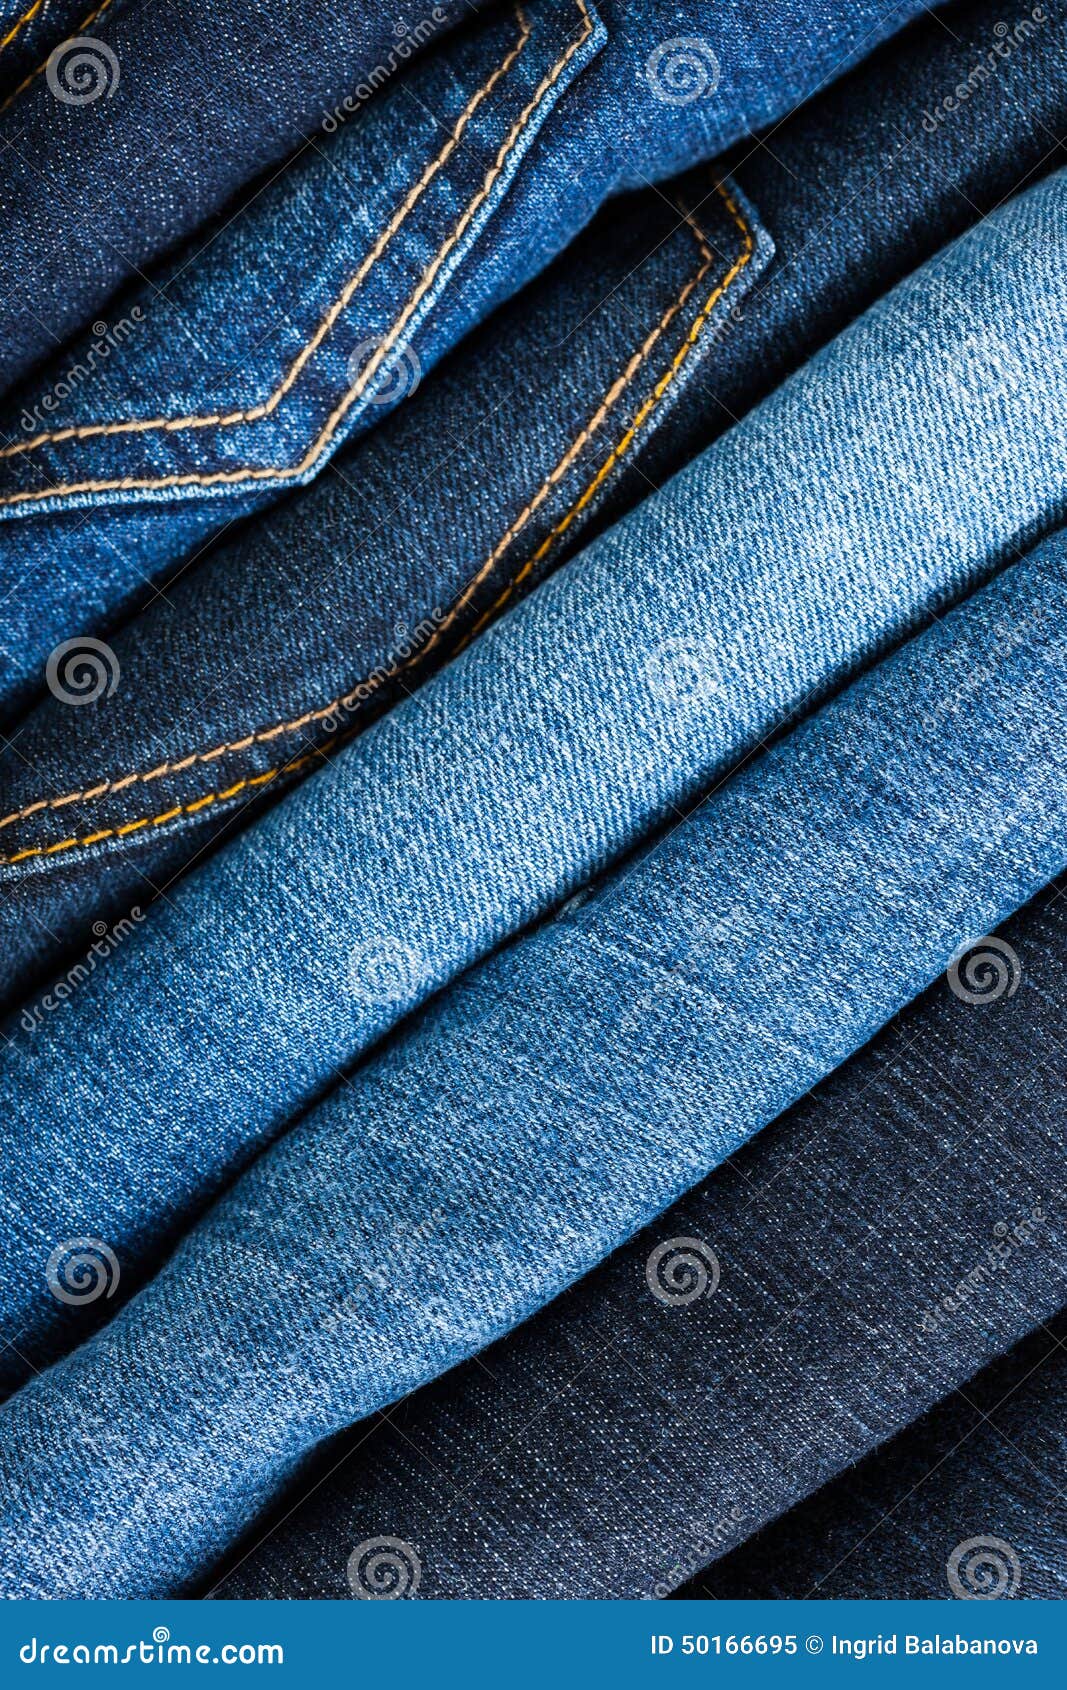 Blue jeans stock image. Image of closeup, objects, indigo - 50166695